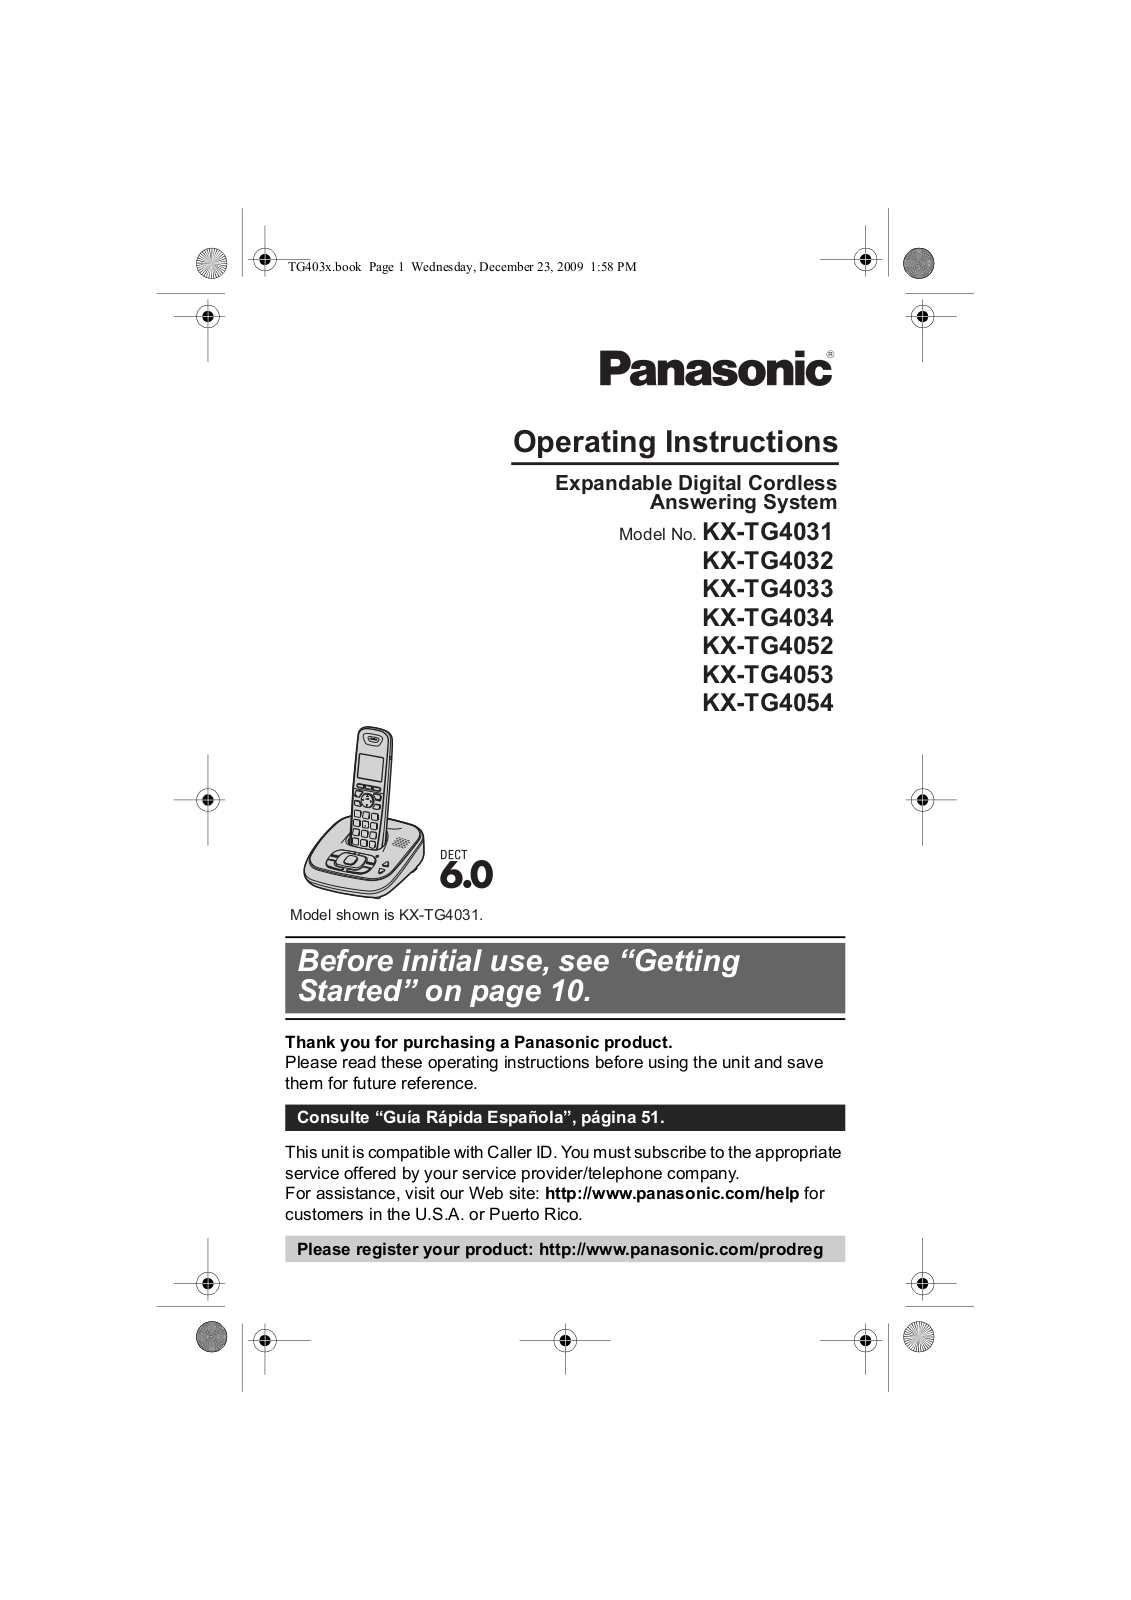 Panasonic KXTG4053, KXTG4032, KXTG4034 Operating Instructions